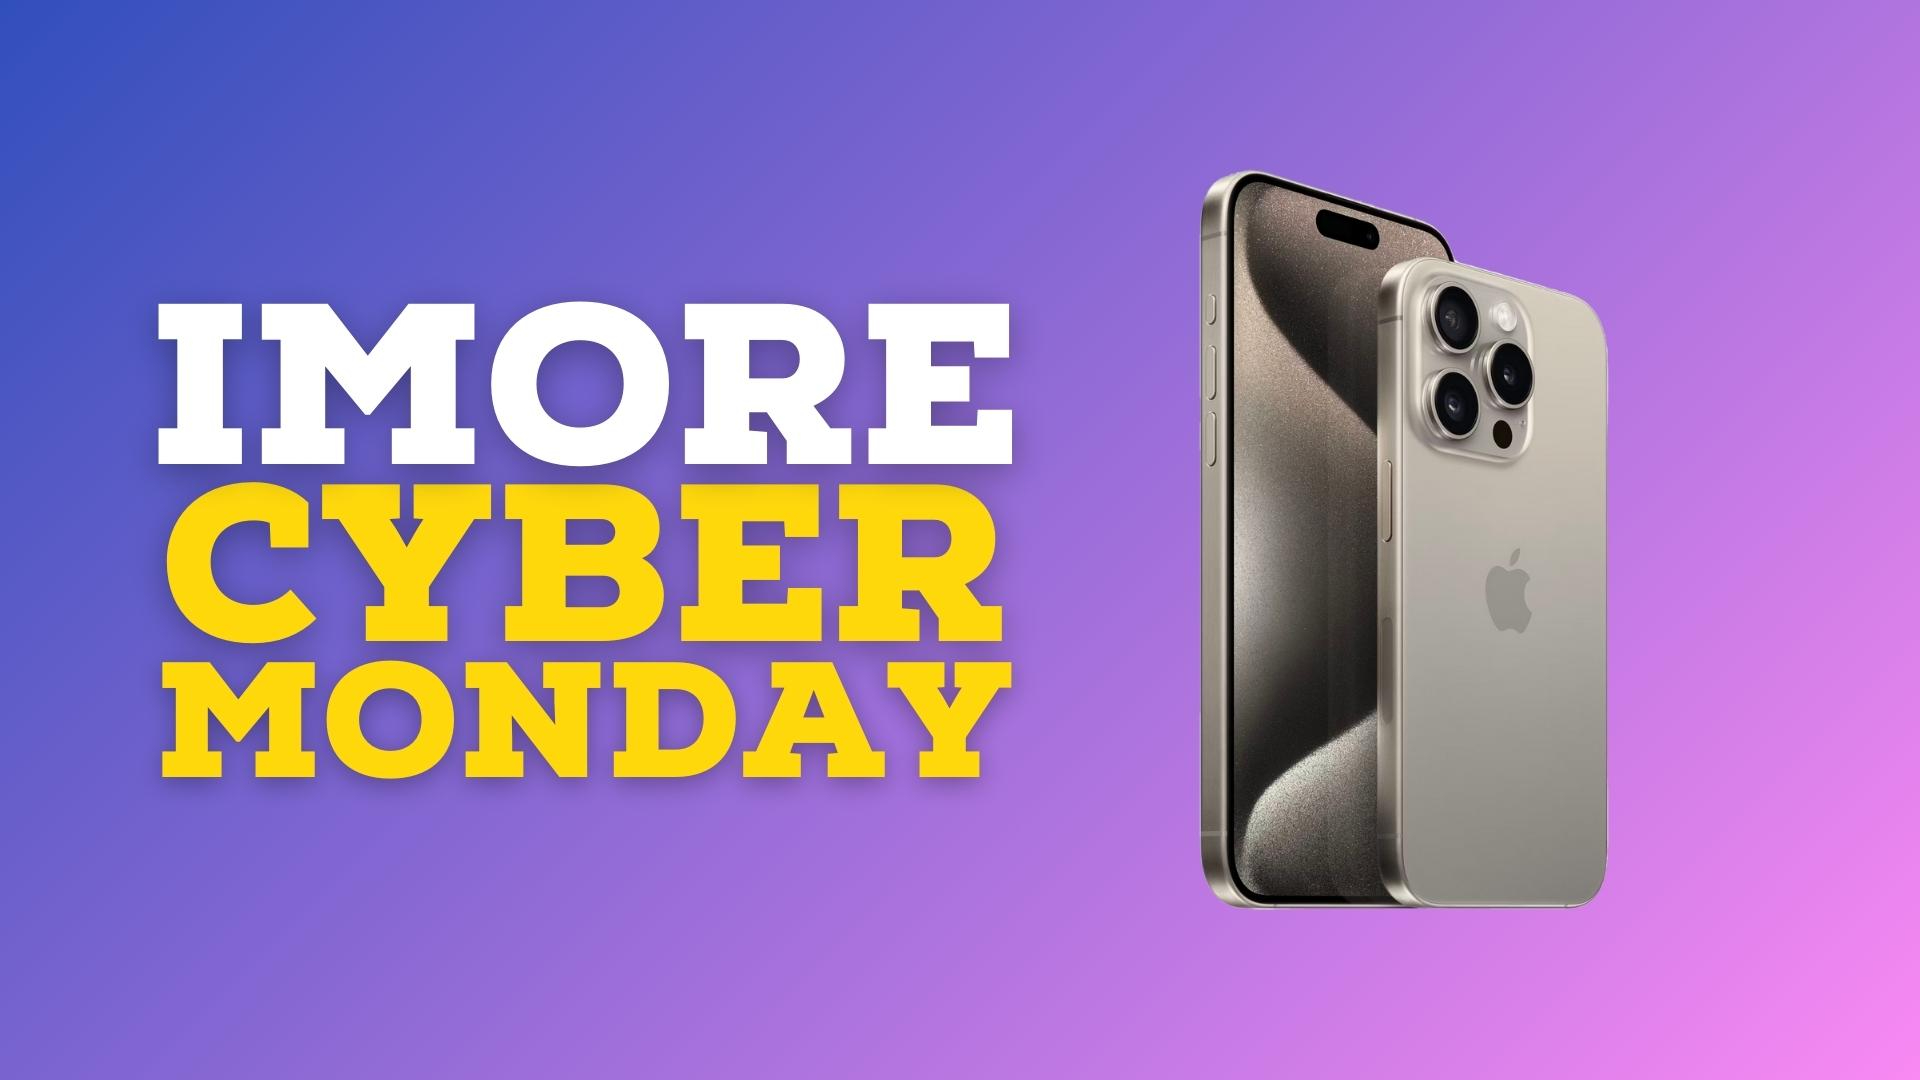 Best Cyber Monday iPhone deals: Weekend-long iPhone savings